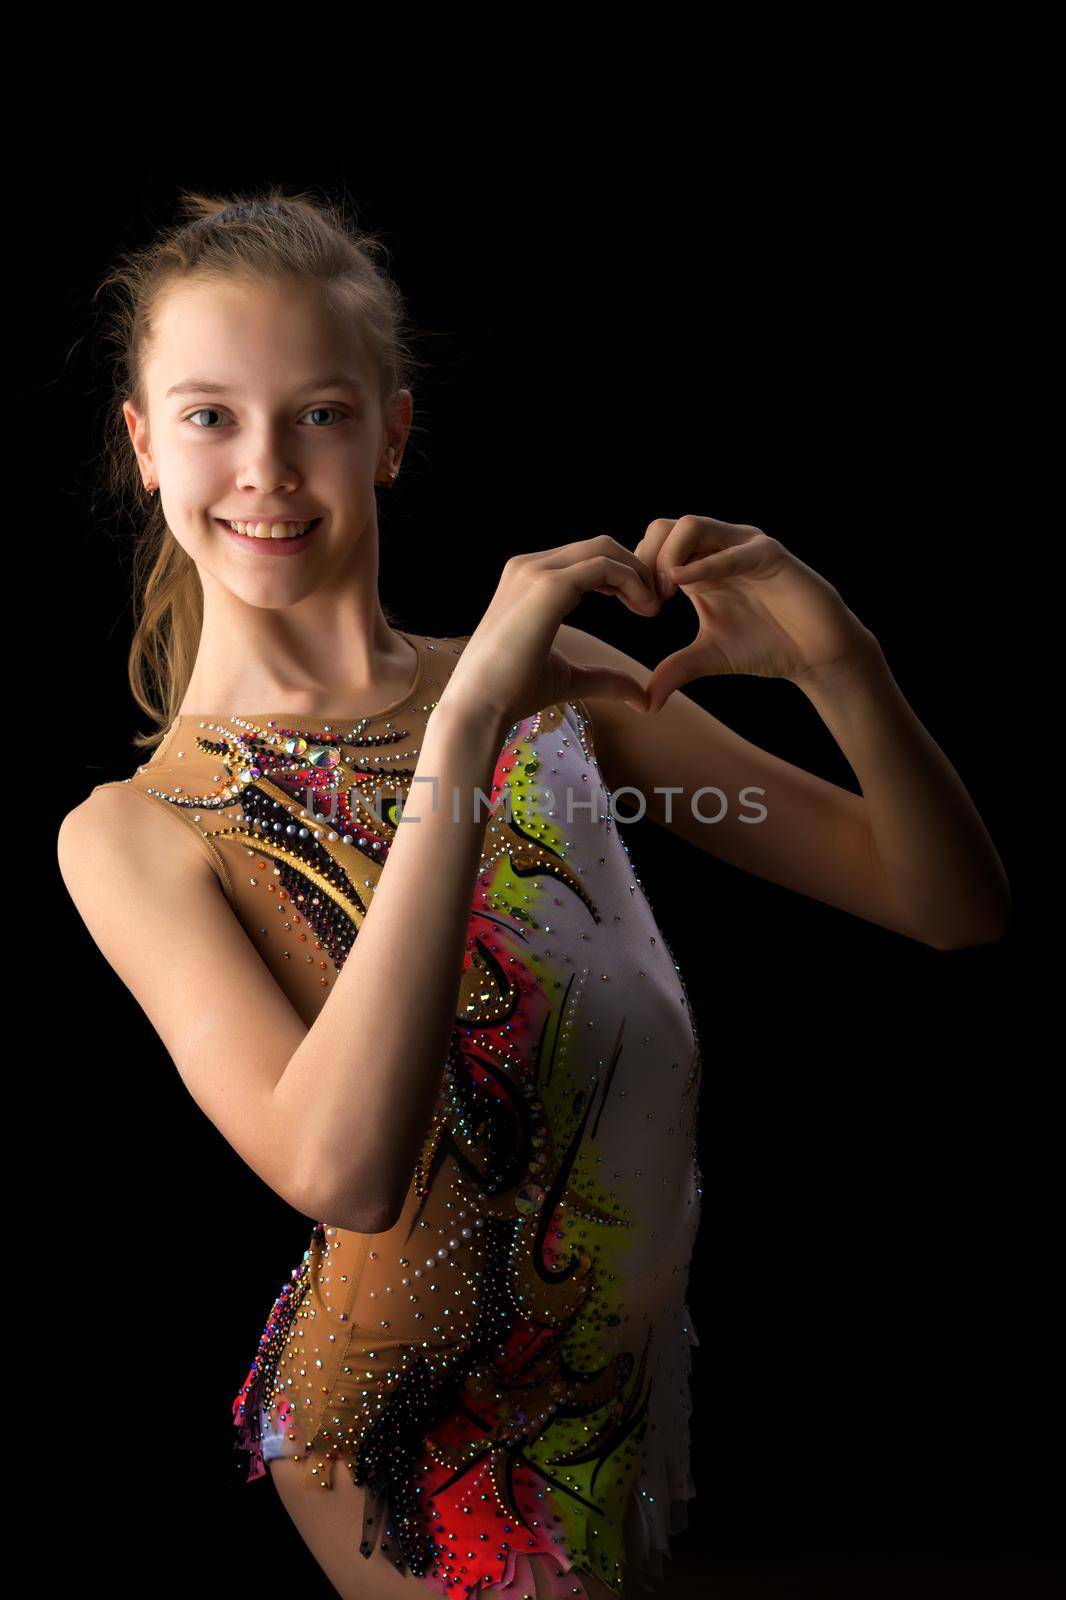 Girl gymnast on a black background by kolesnikov_studio